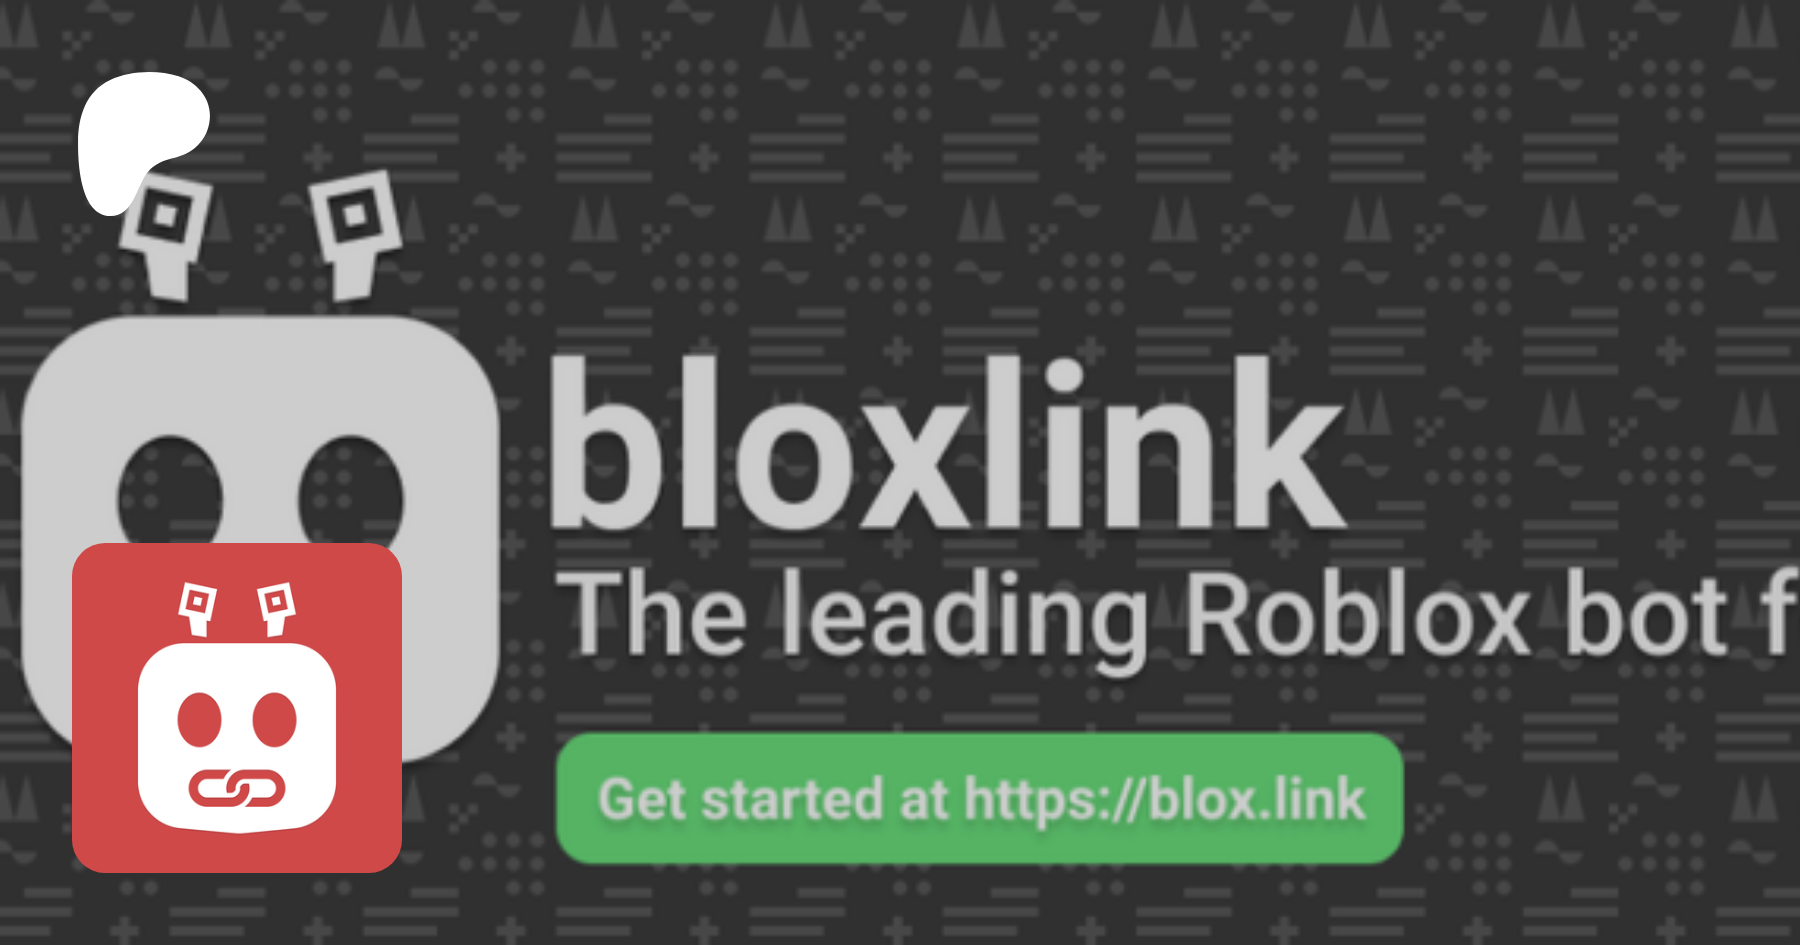 Bloxlink Team, creating Bloxlink